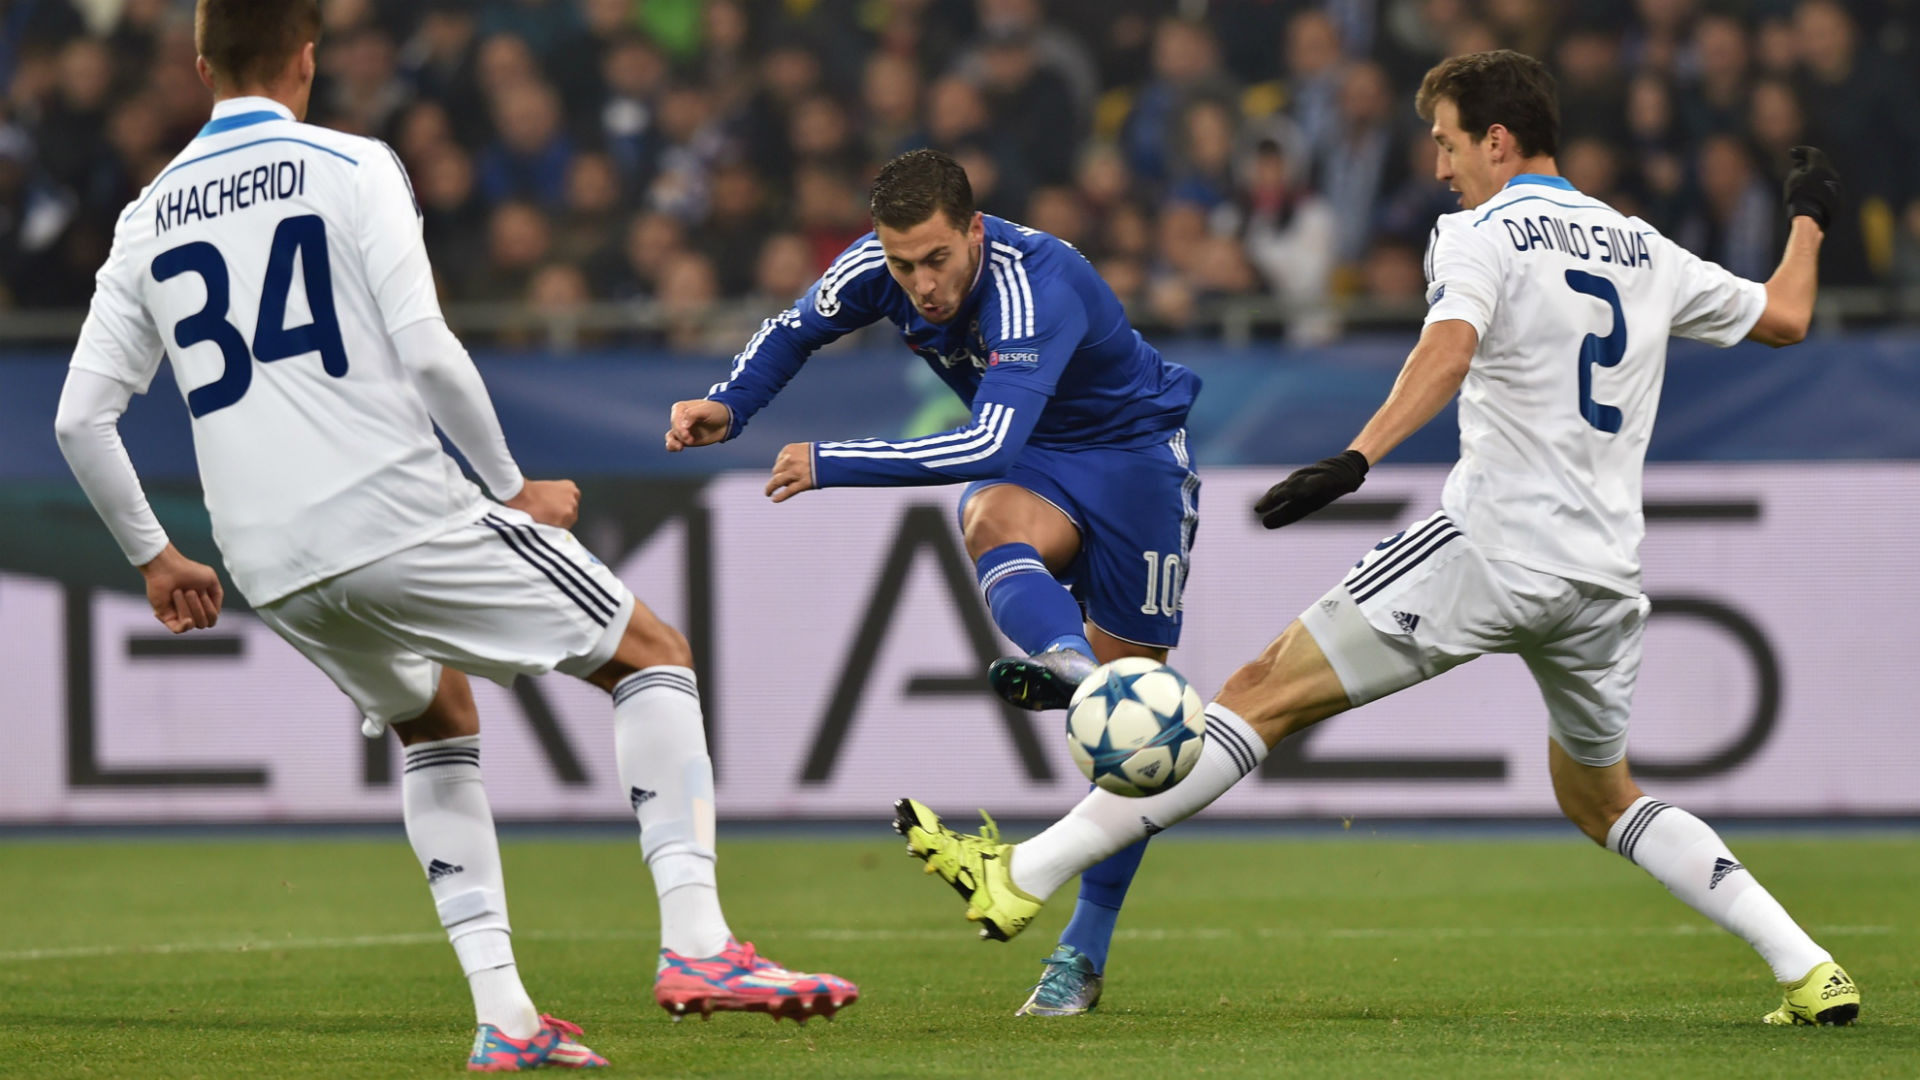 Ferencvaros draws 2-2 with Dynamo Kyiv in Champions League